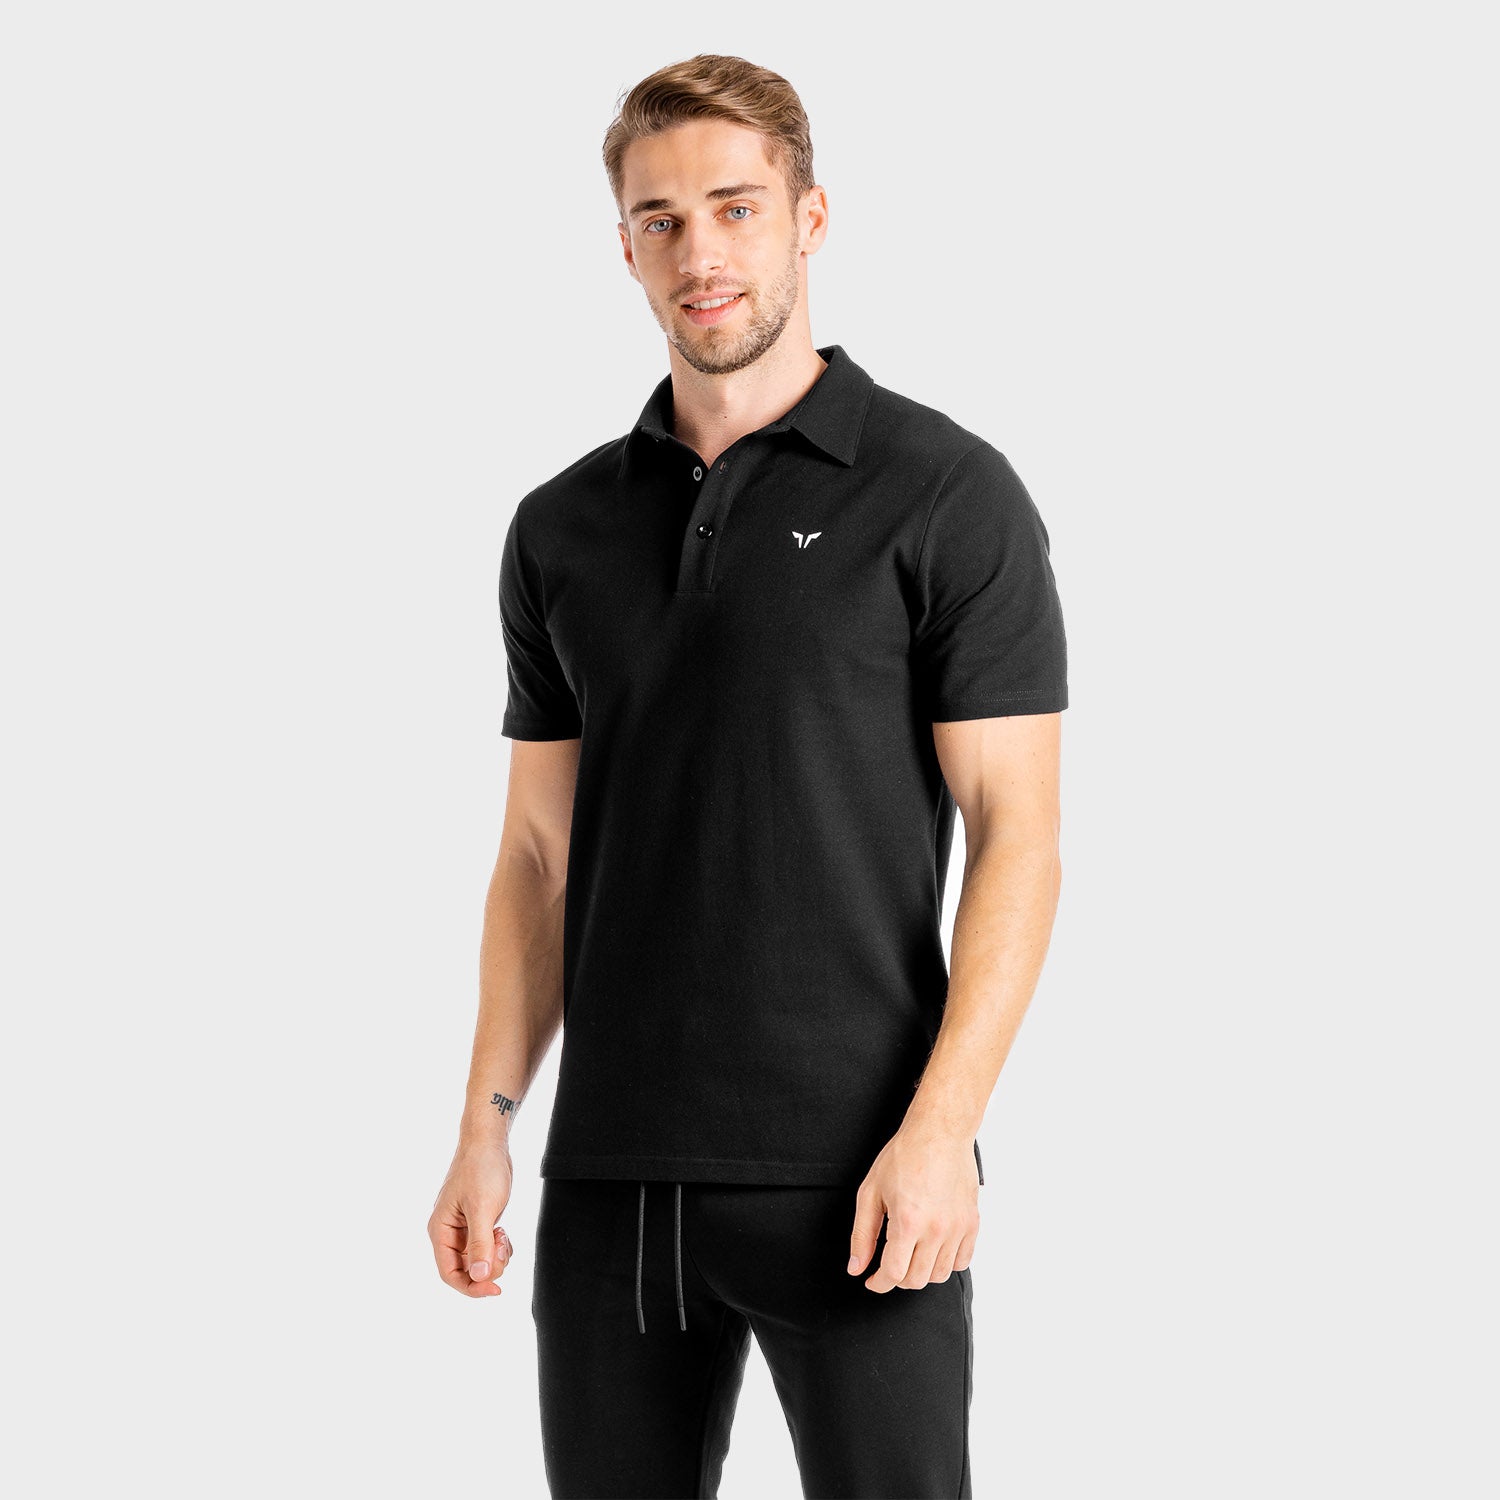 SQUATWOLF-workout-shirts-for-men-core-polo-black-gym-wear